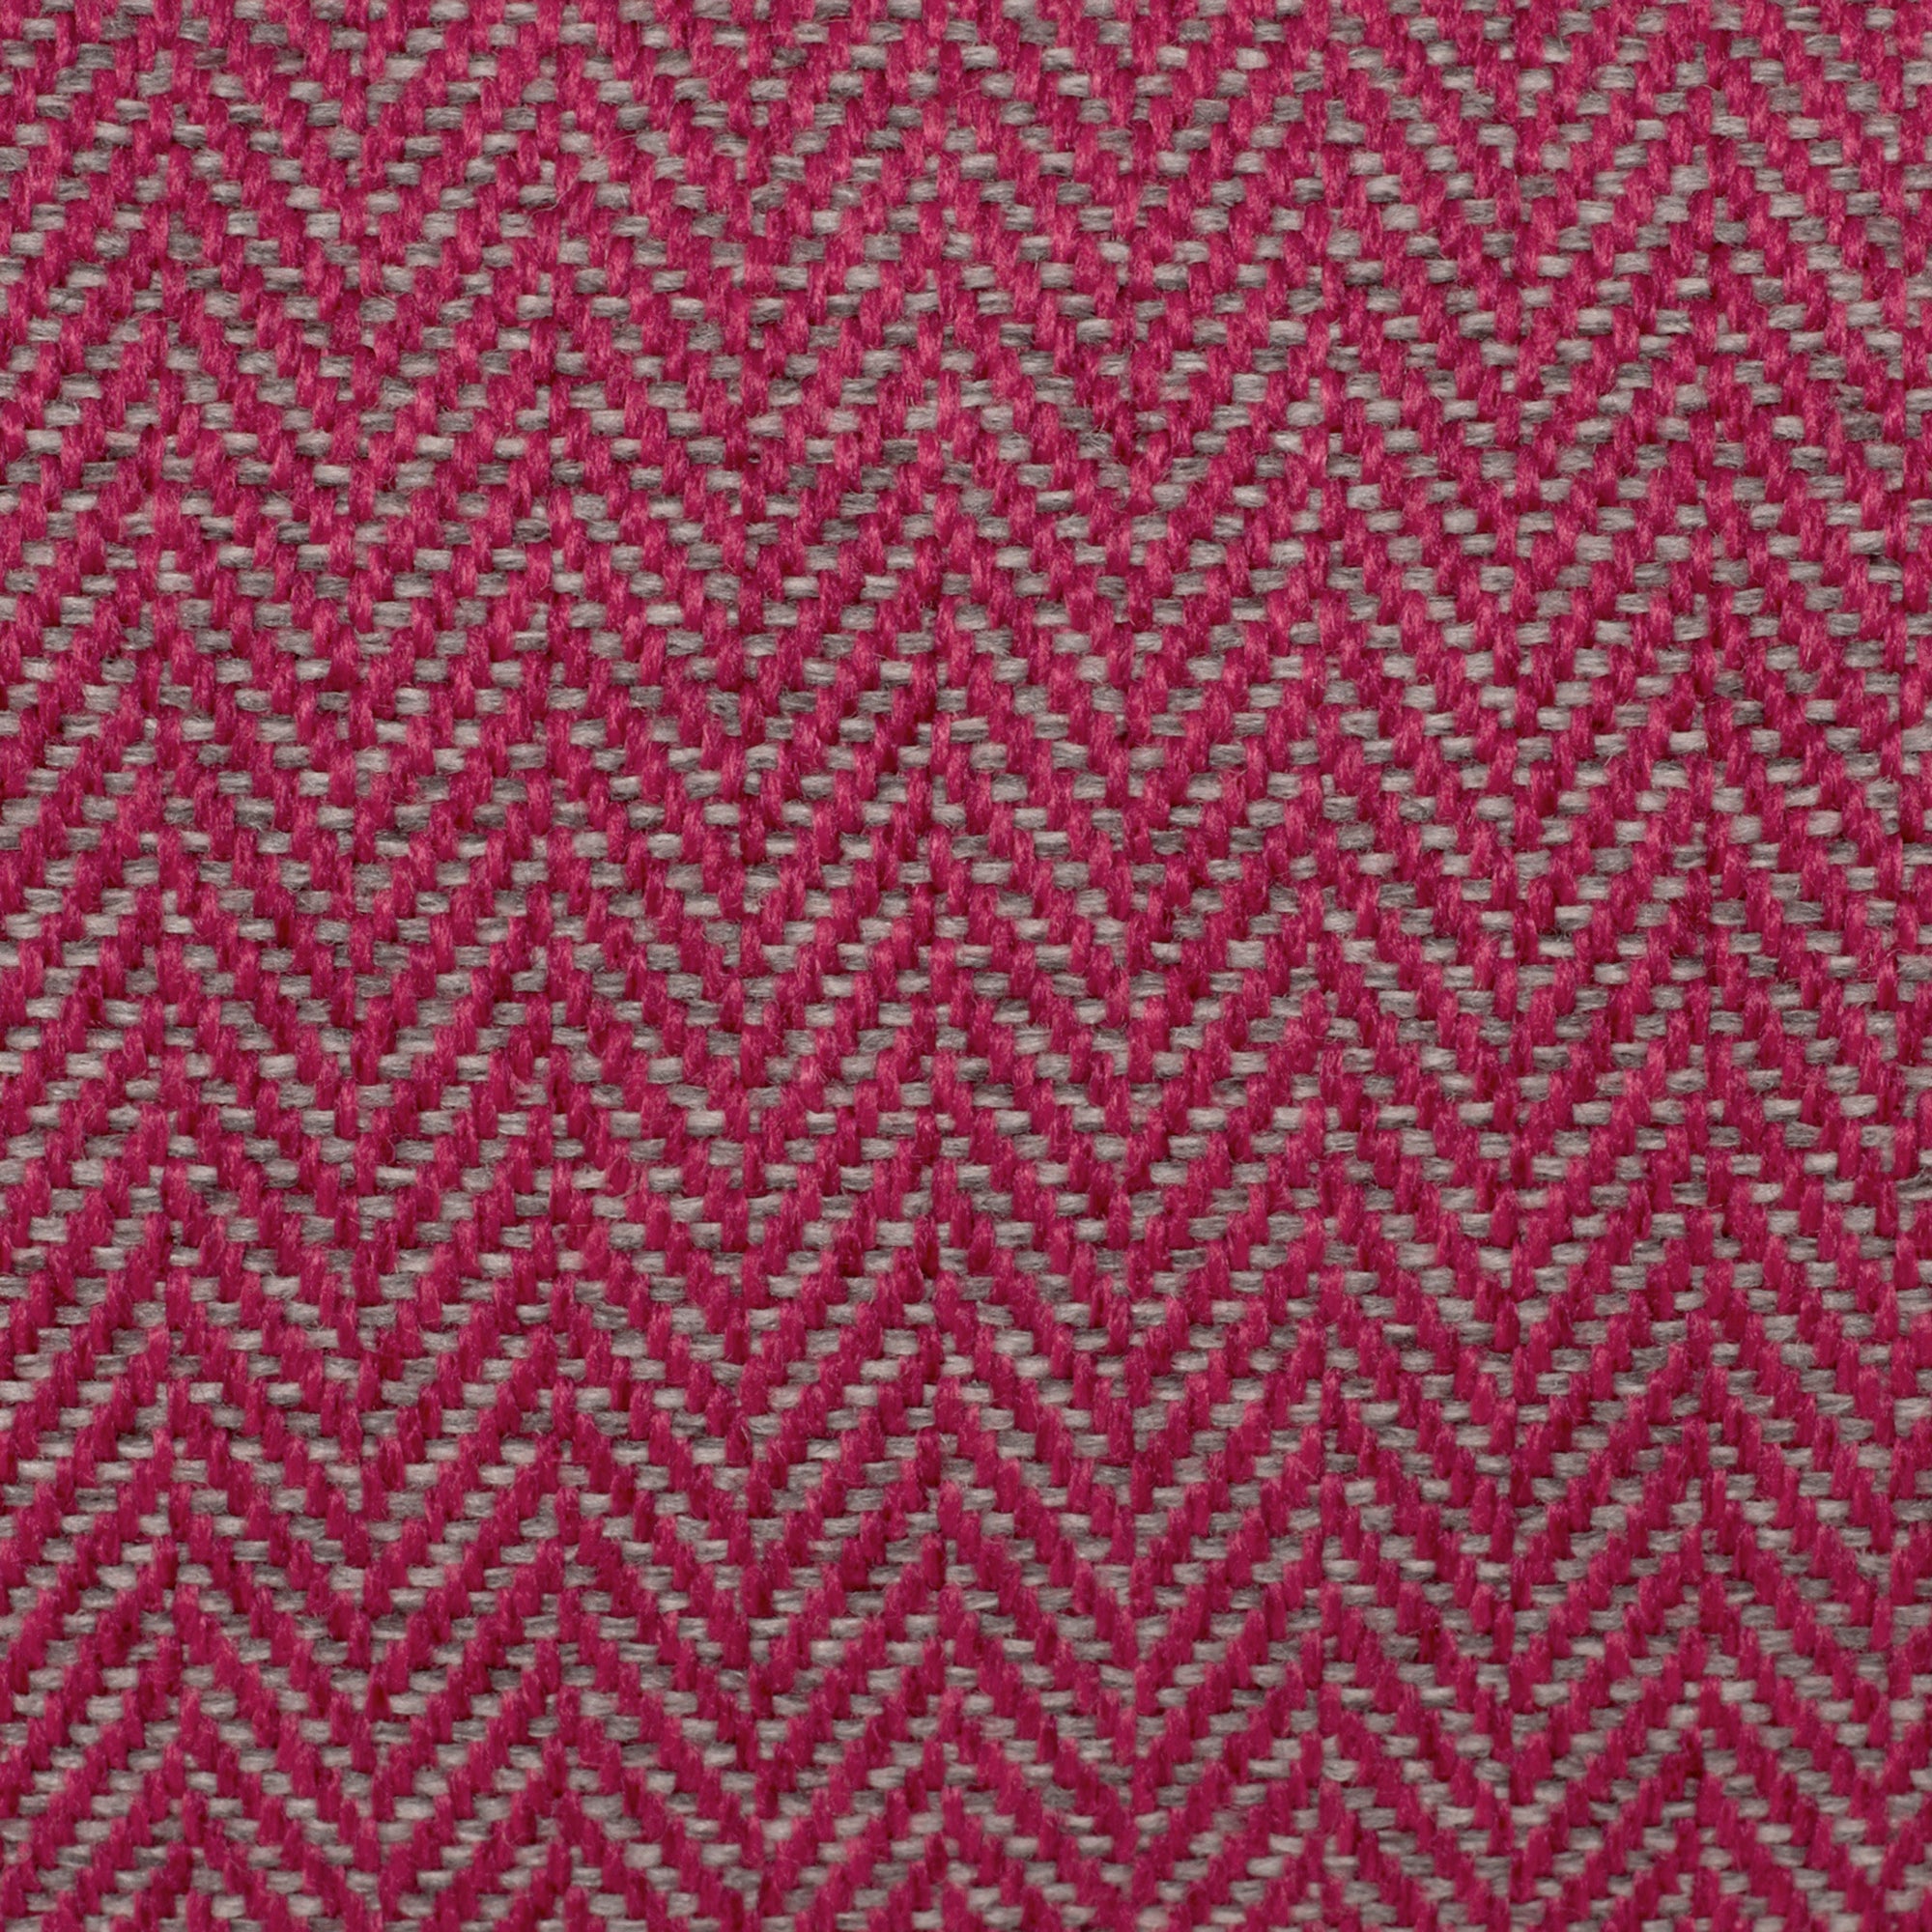 KONA CAVE® designer bolster dog bed in elegant pink herringbone fabric - detail.